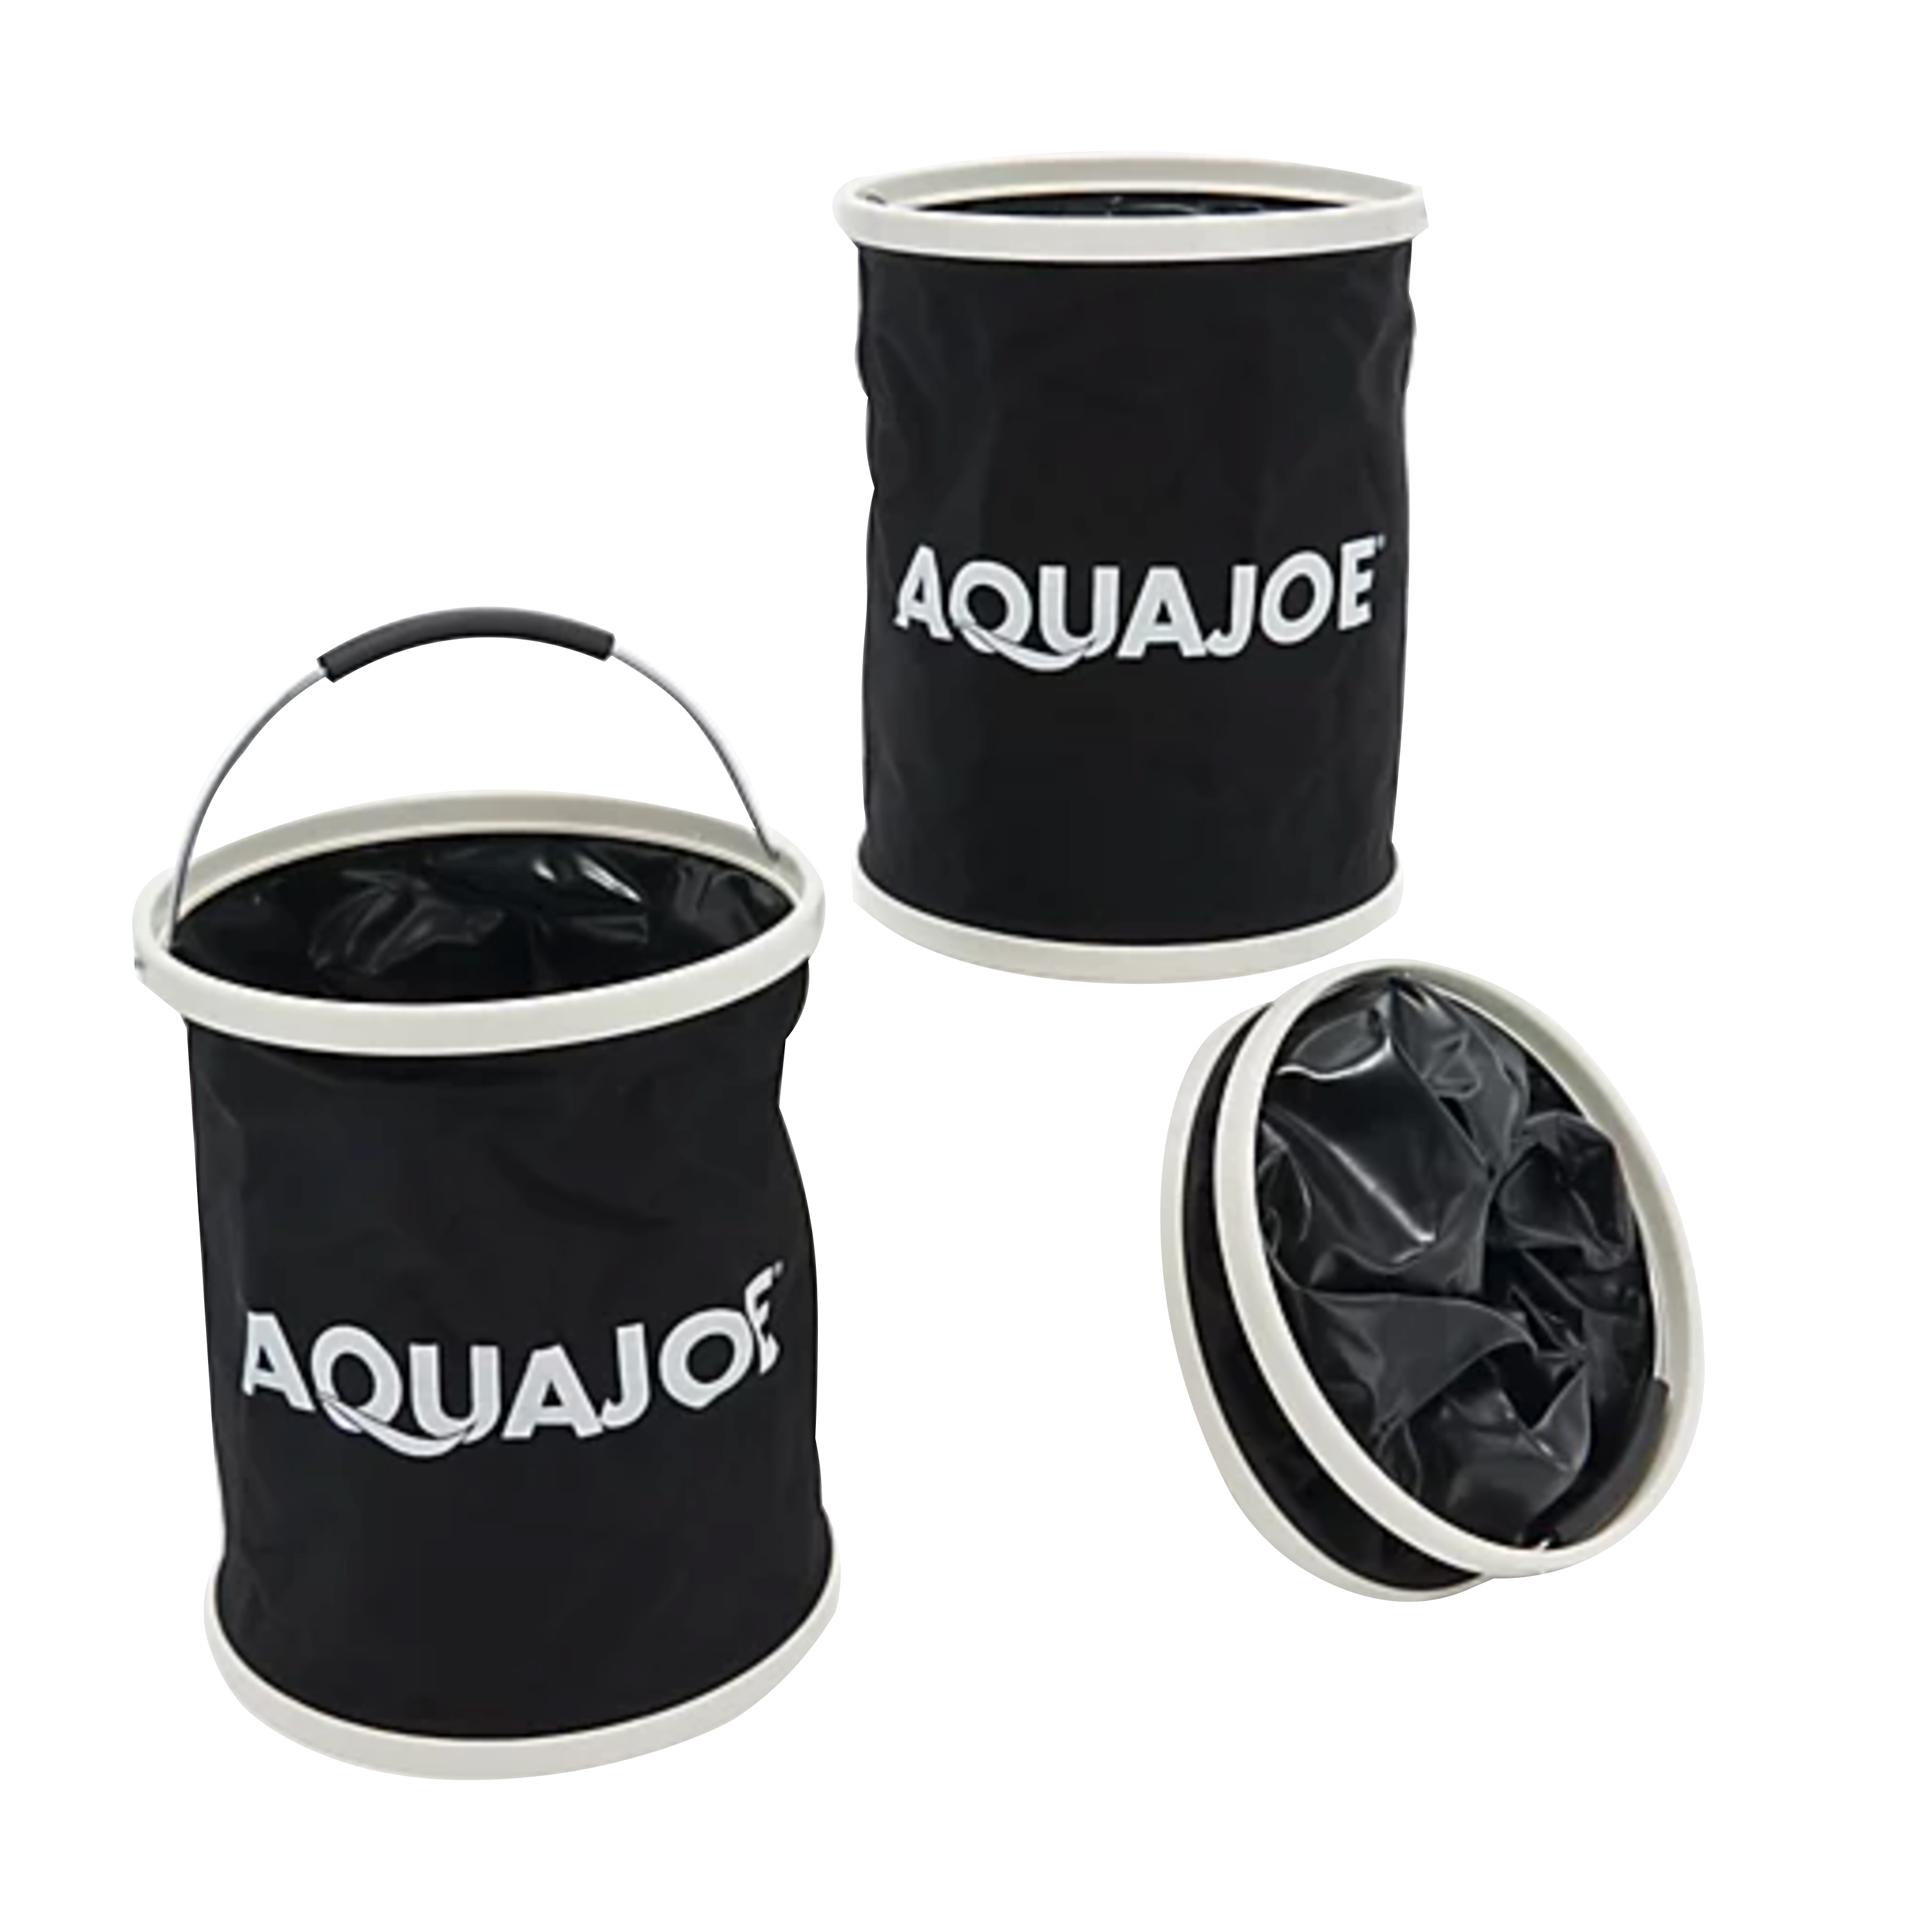 Aqua Joe Set of 3 Portable Folding Buckets, 3.4 Gal